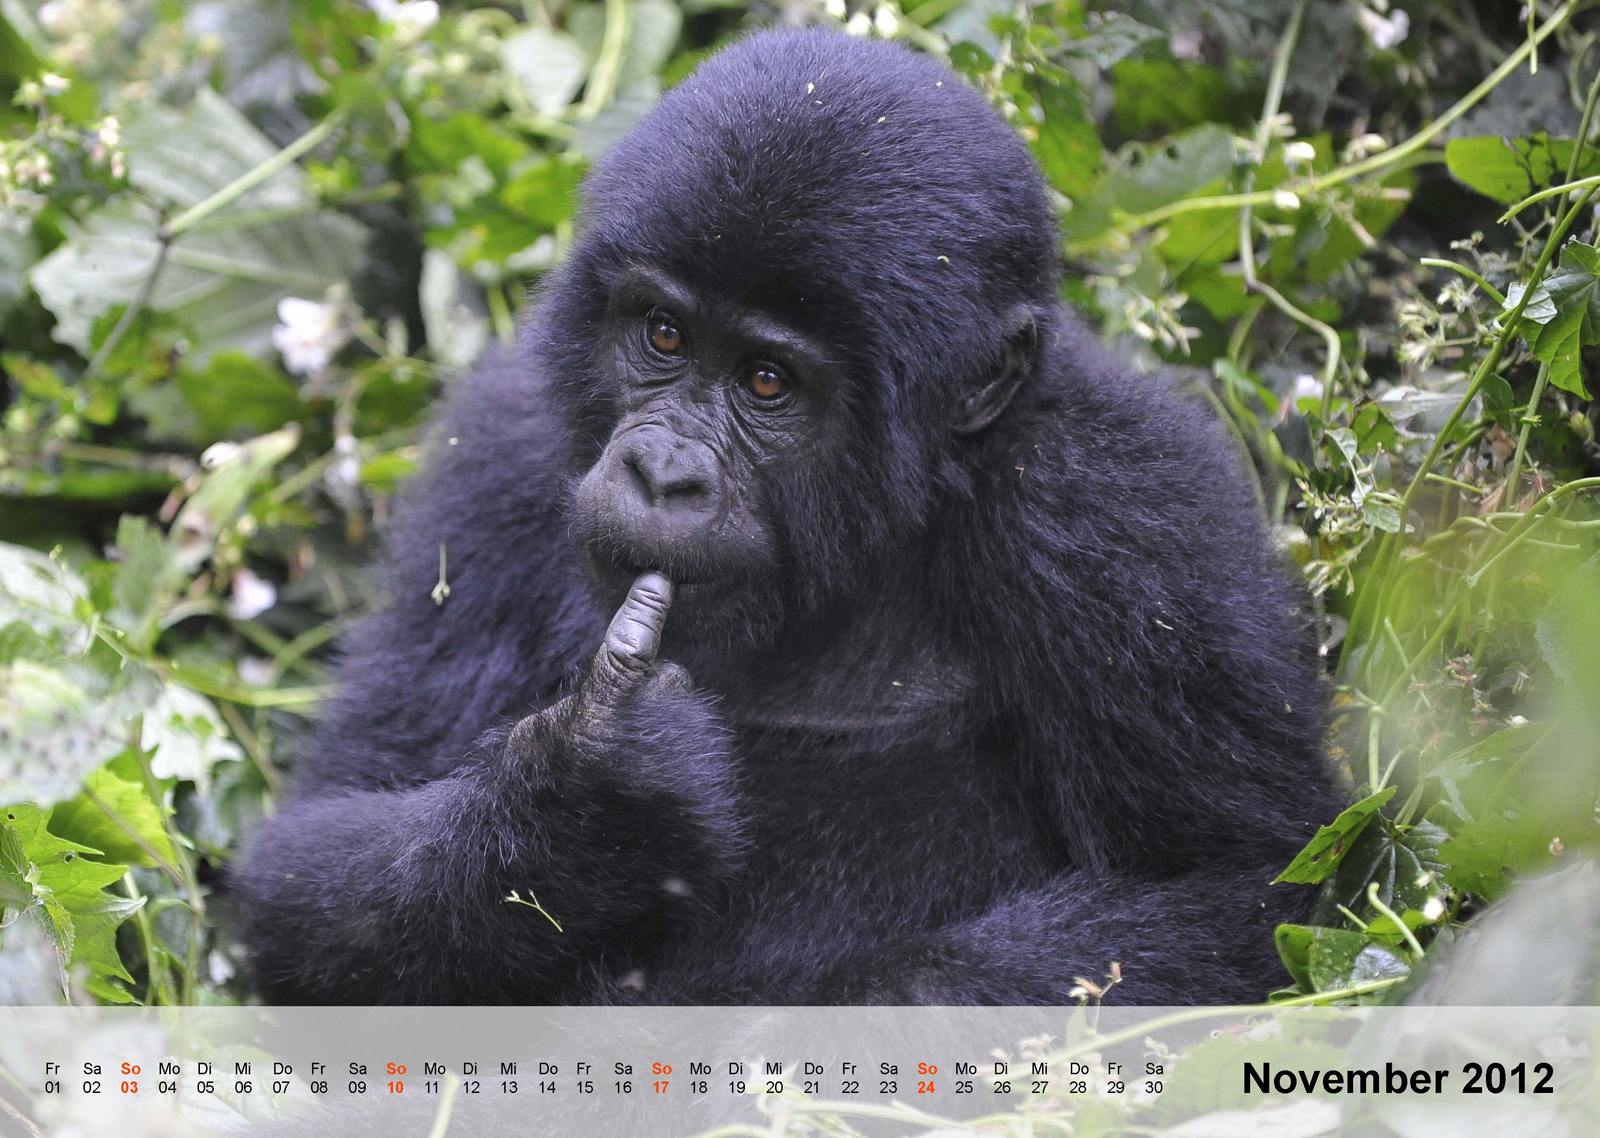 Berggorilla | Mountain gorilla | Bwindi Impenetrable National Park | Uganda - Kalender 2012 - November